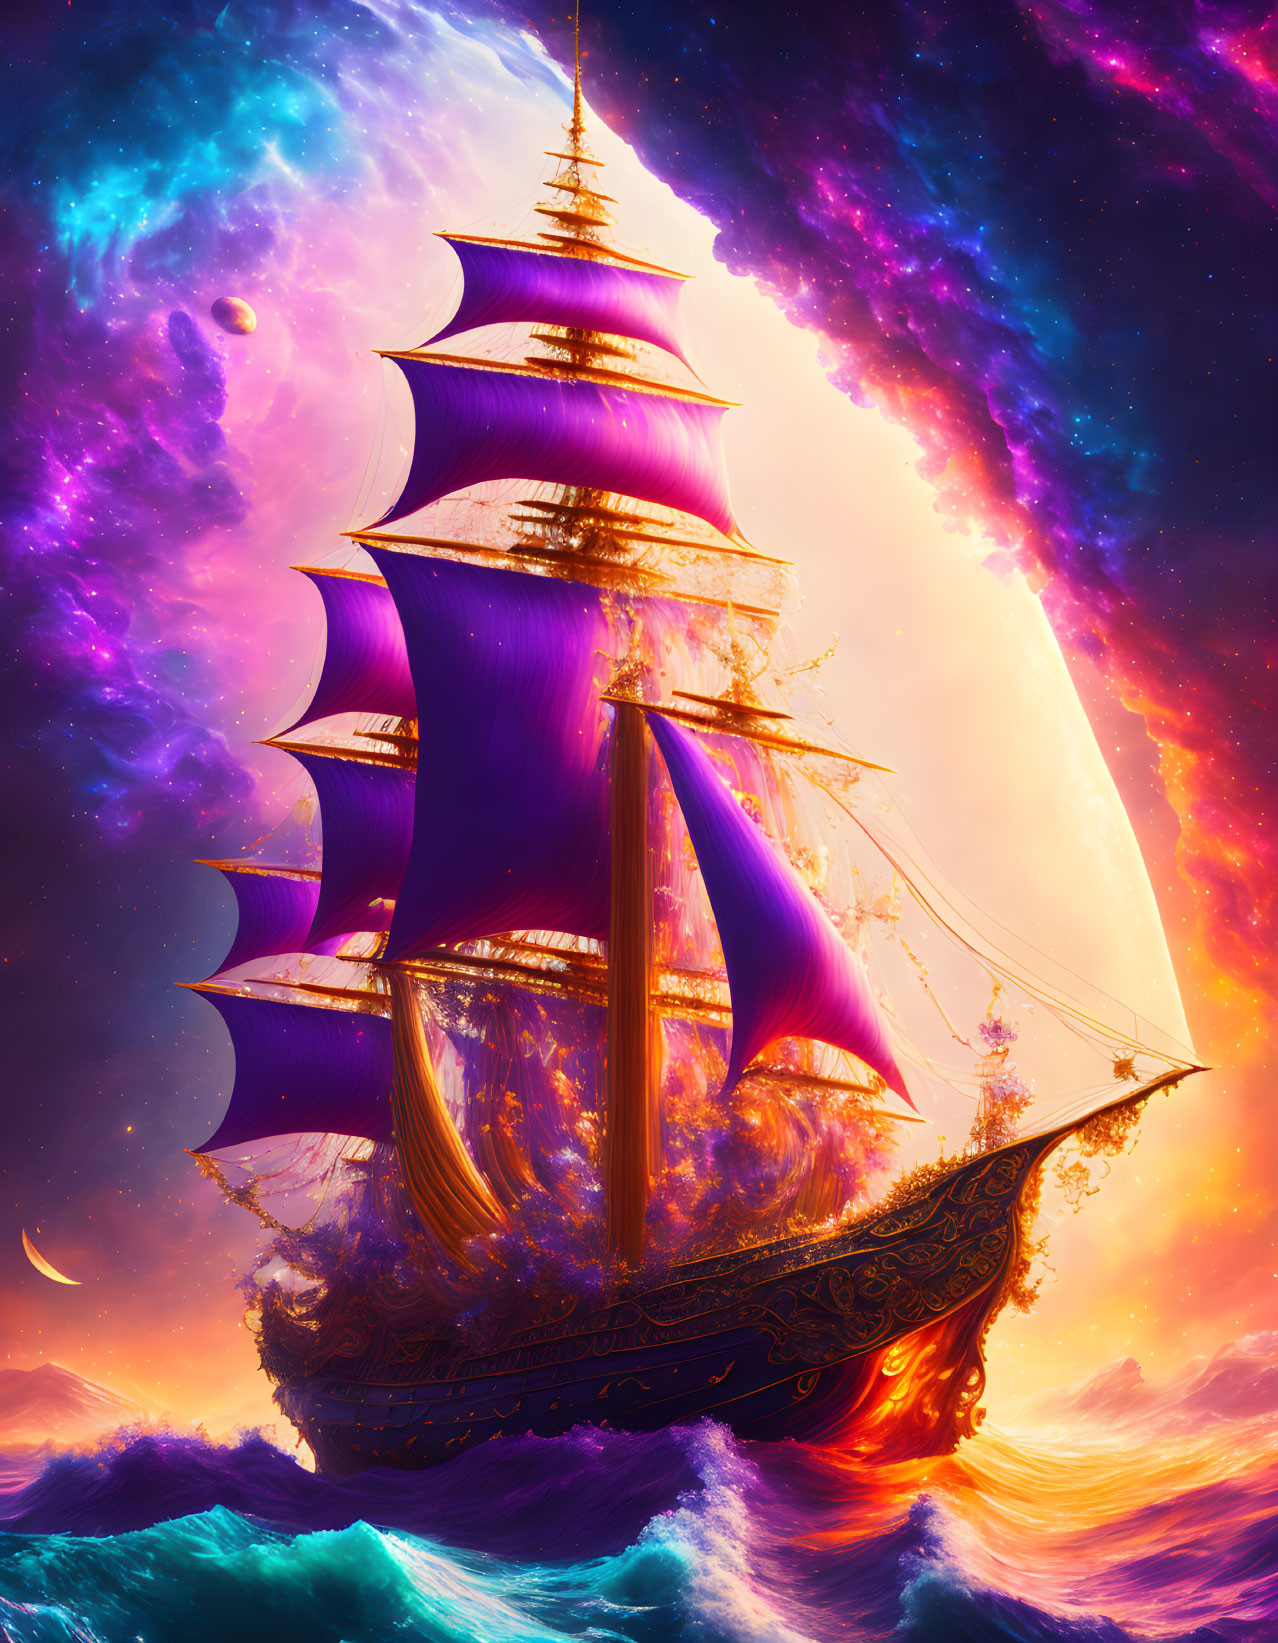 Purple Sailed Ship Sailing Through Cosmic Waves and Galaxy